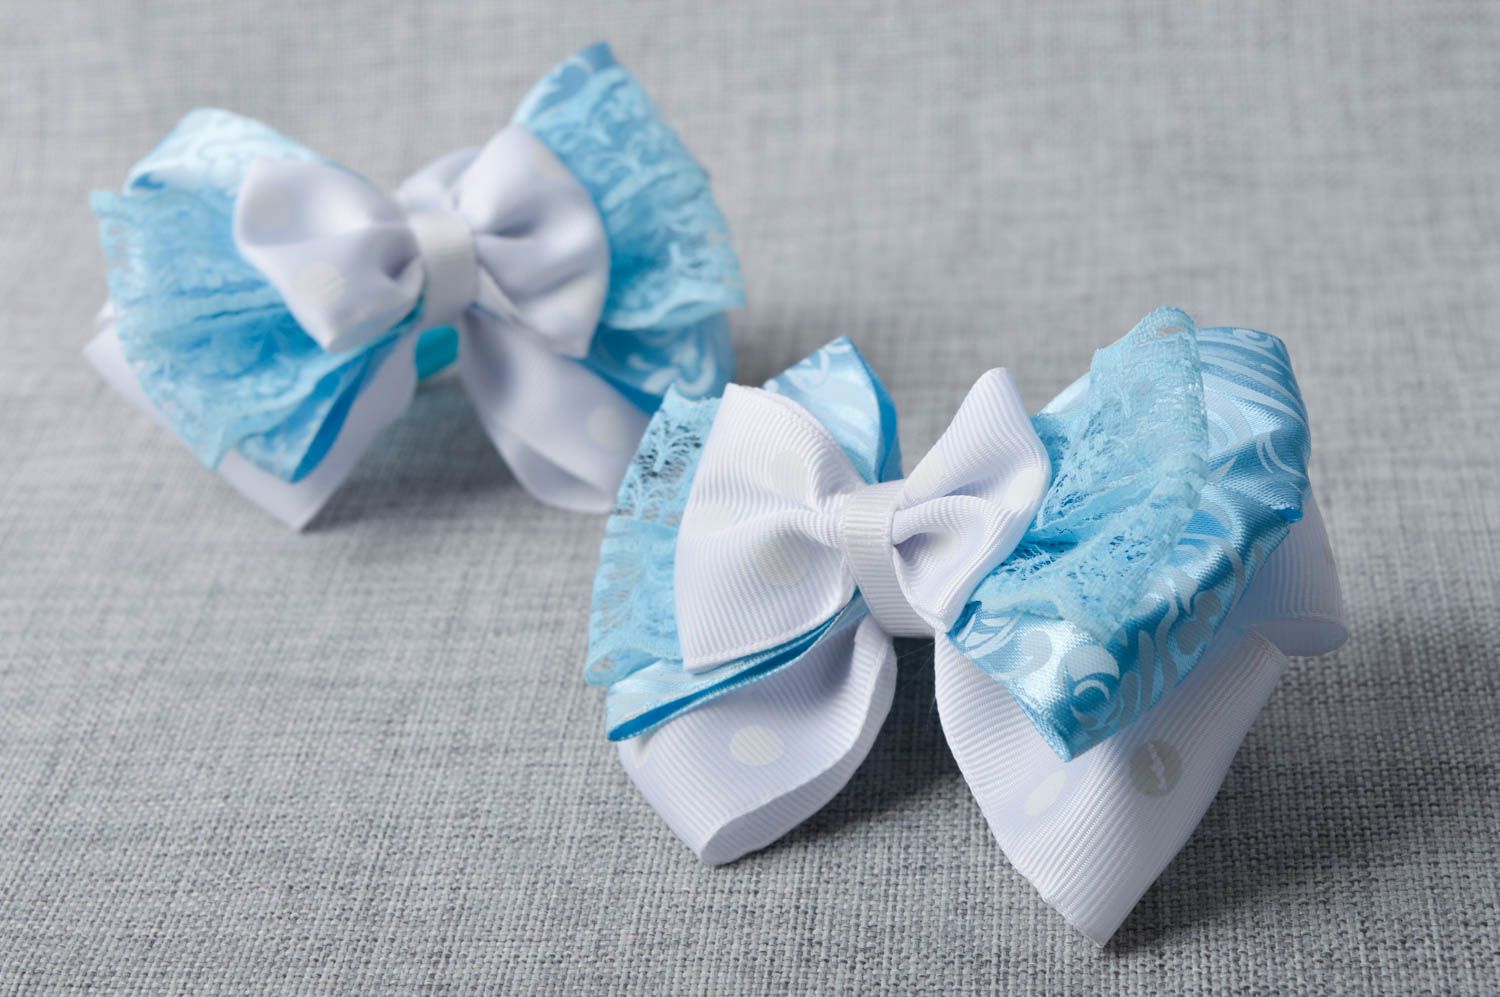 Handmade blue and white hair ties 2 accessories for kids unusual hair ties photo 1